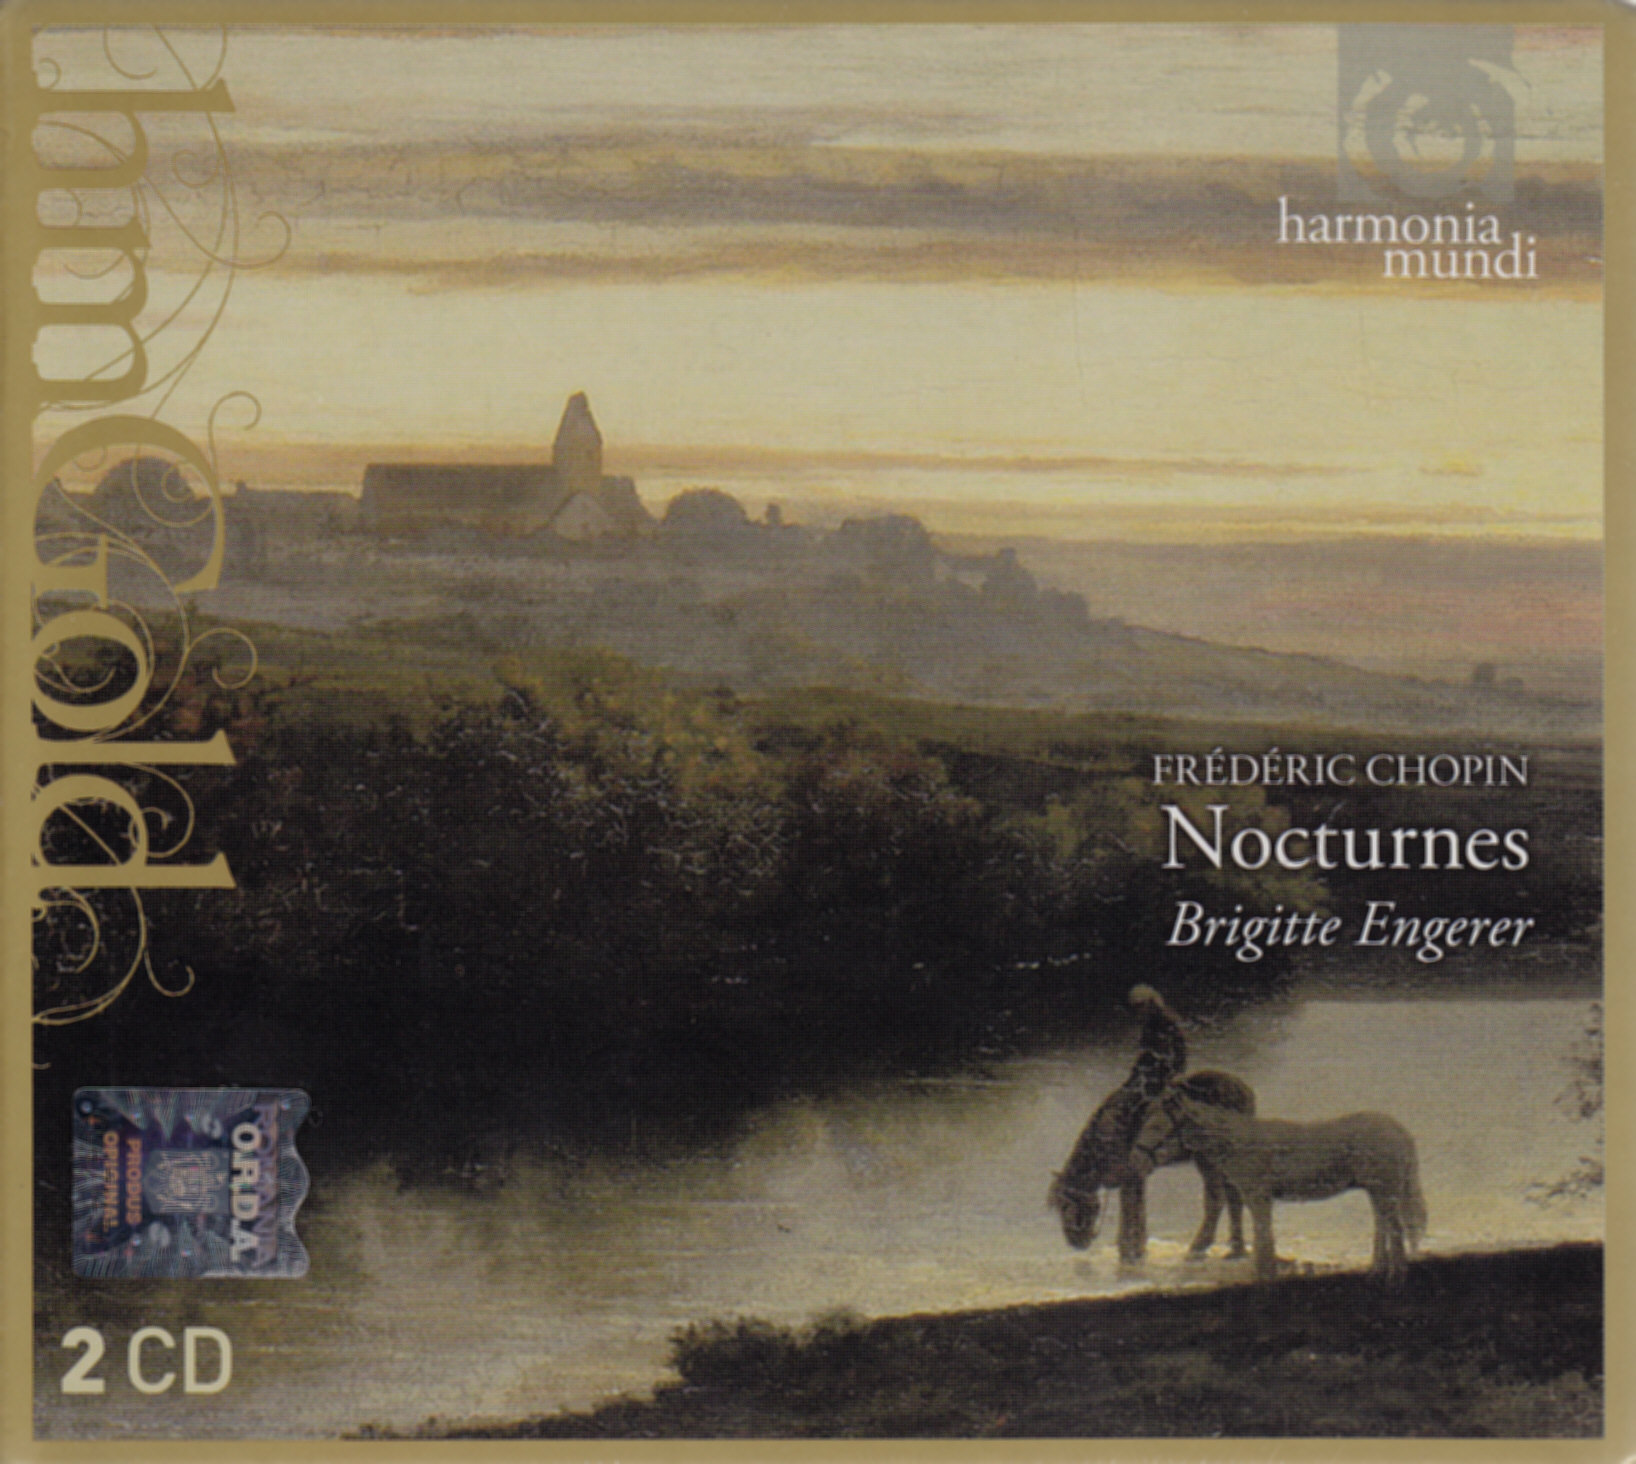 2CD Frederic Chopin - Nocturnes - Brigitte Engerer